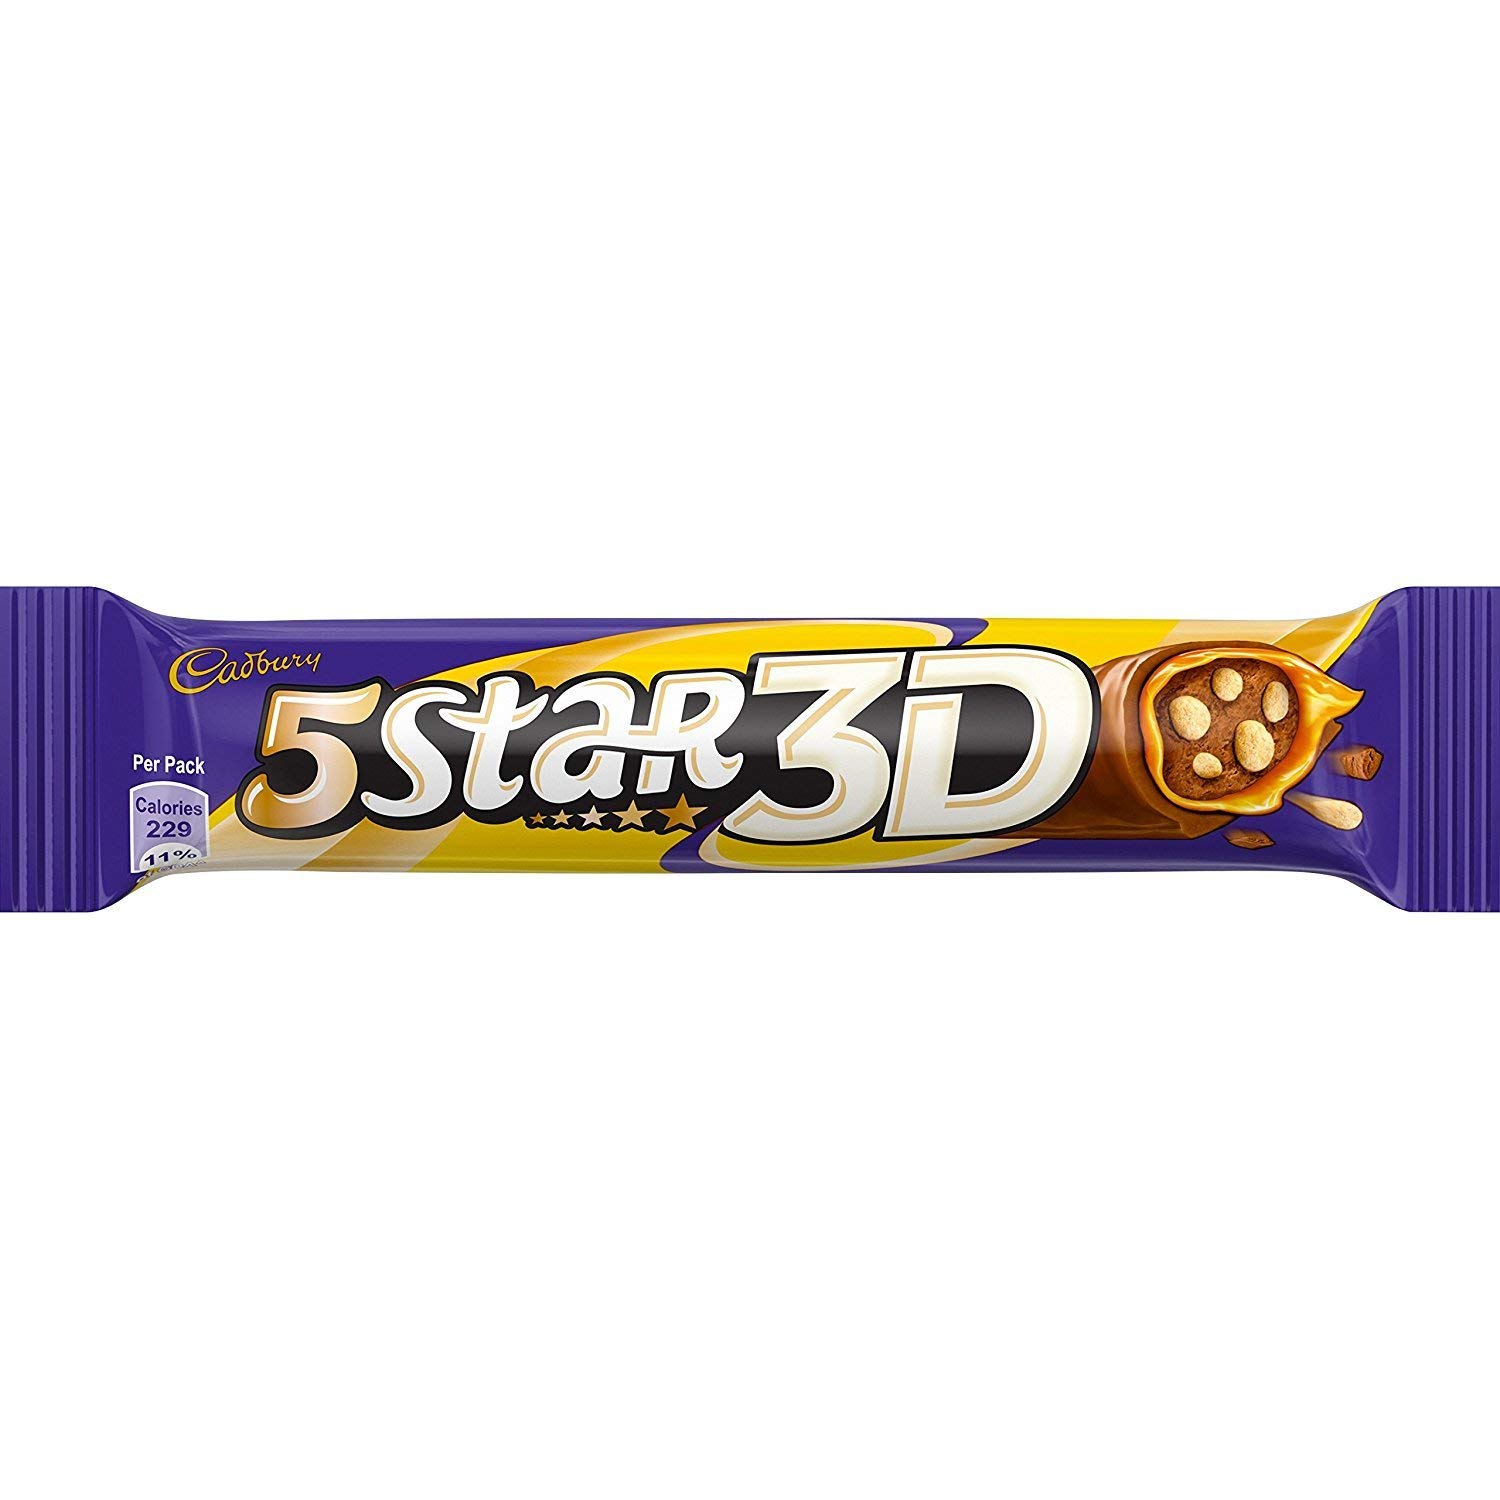 Cadbury 5 star 3D